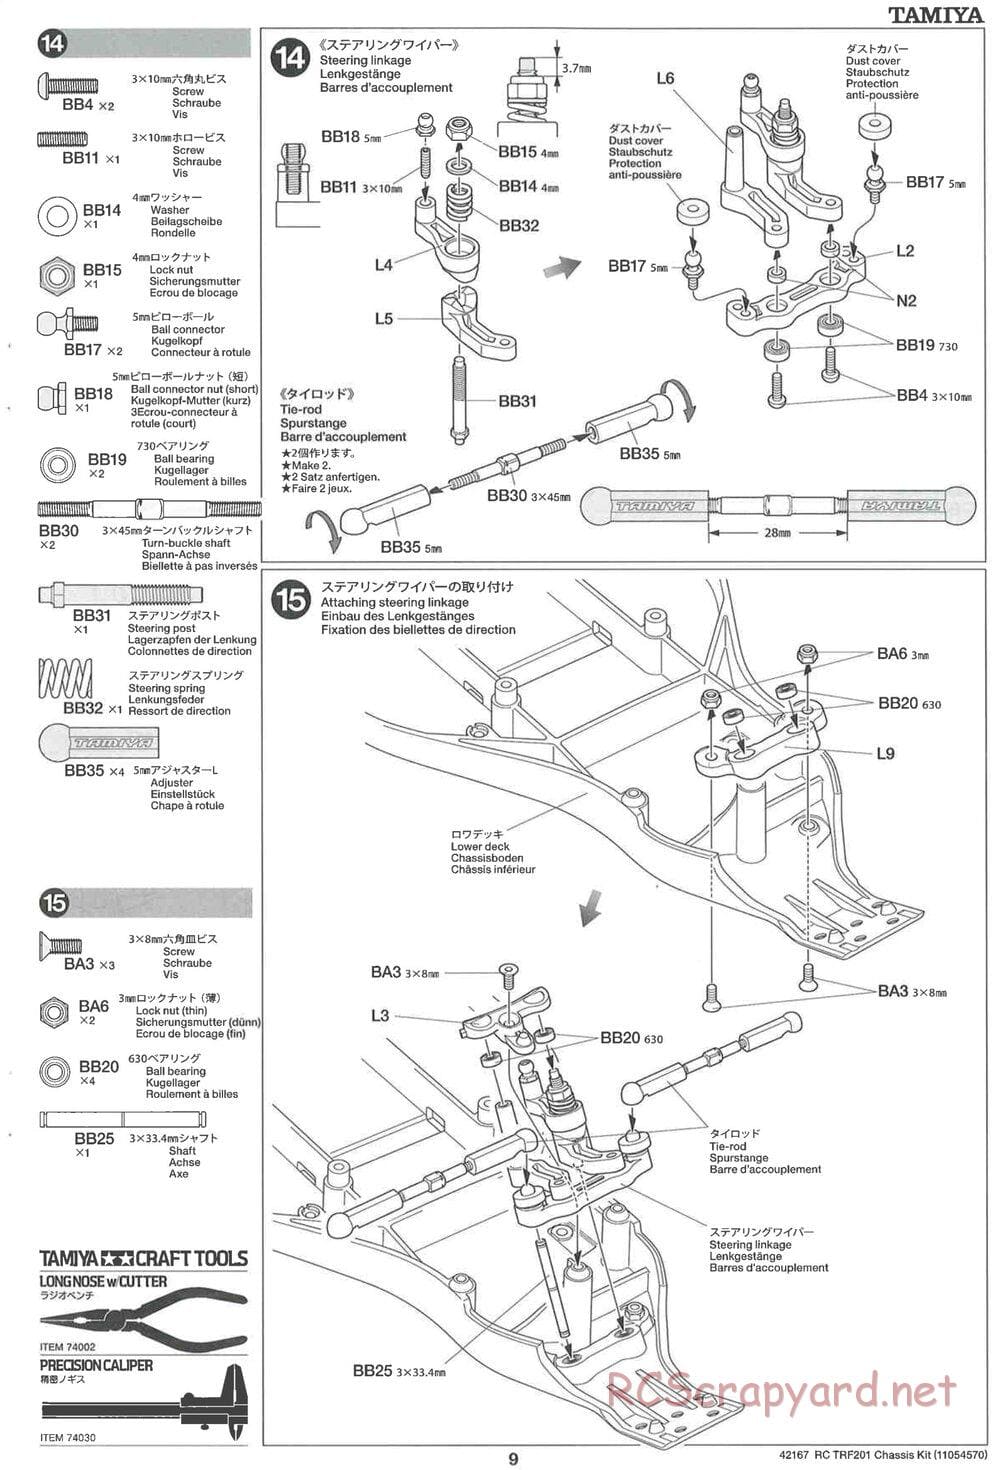 Tamiya - TRF201 Chassis - Manual - Page 9